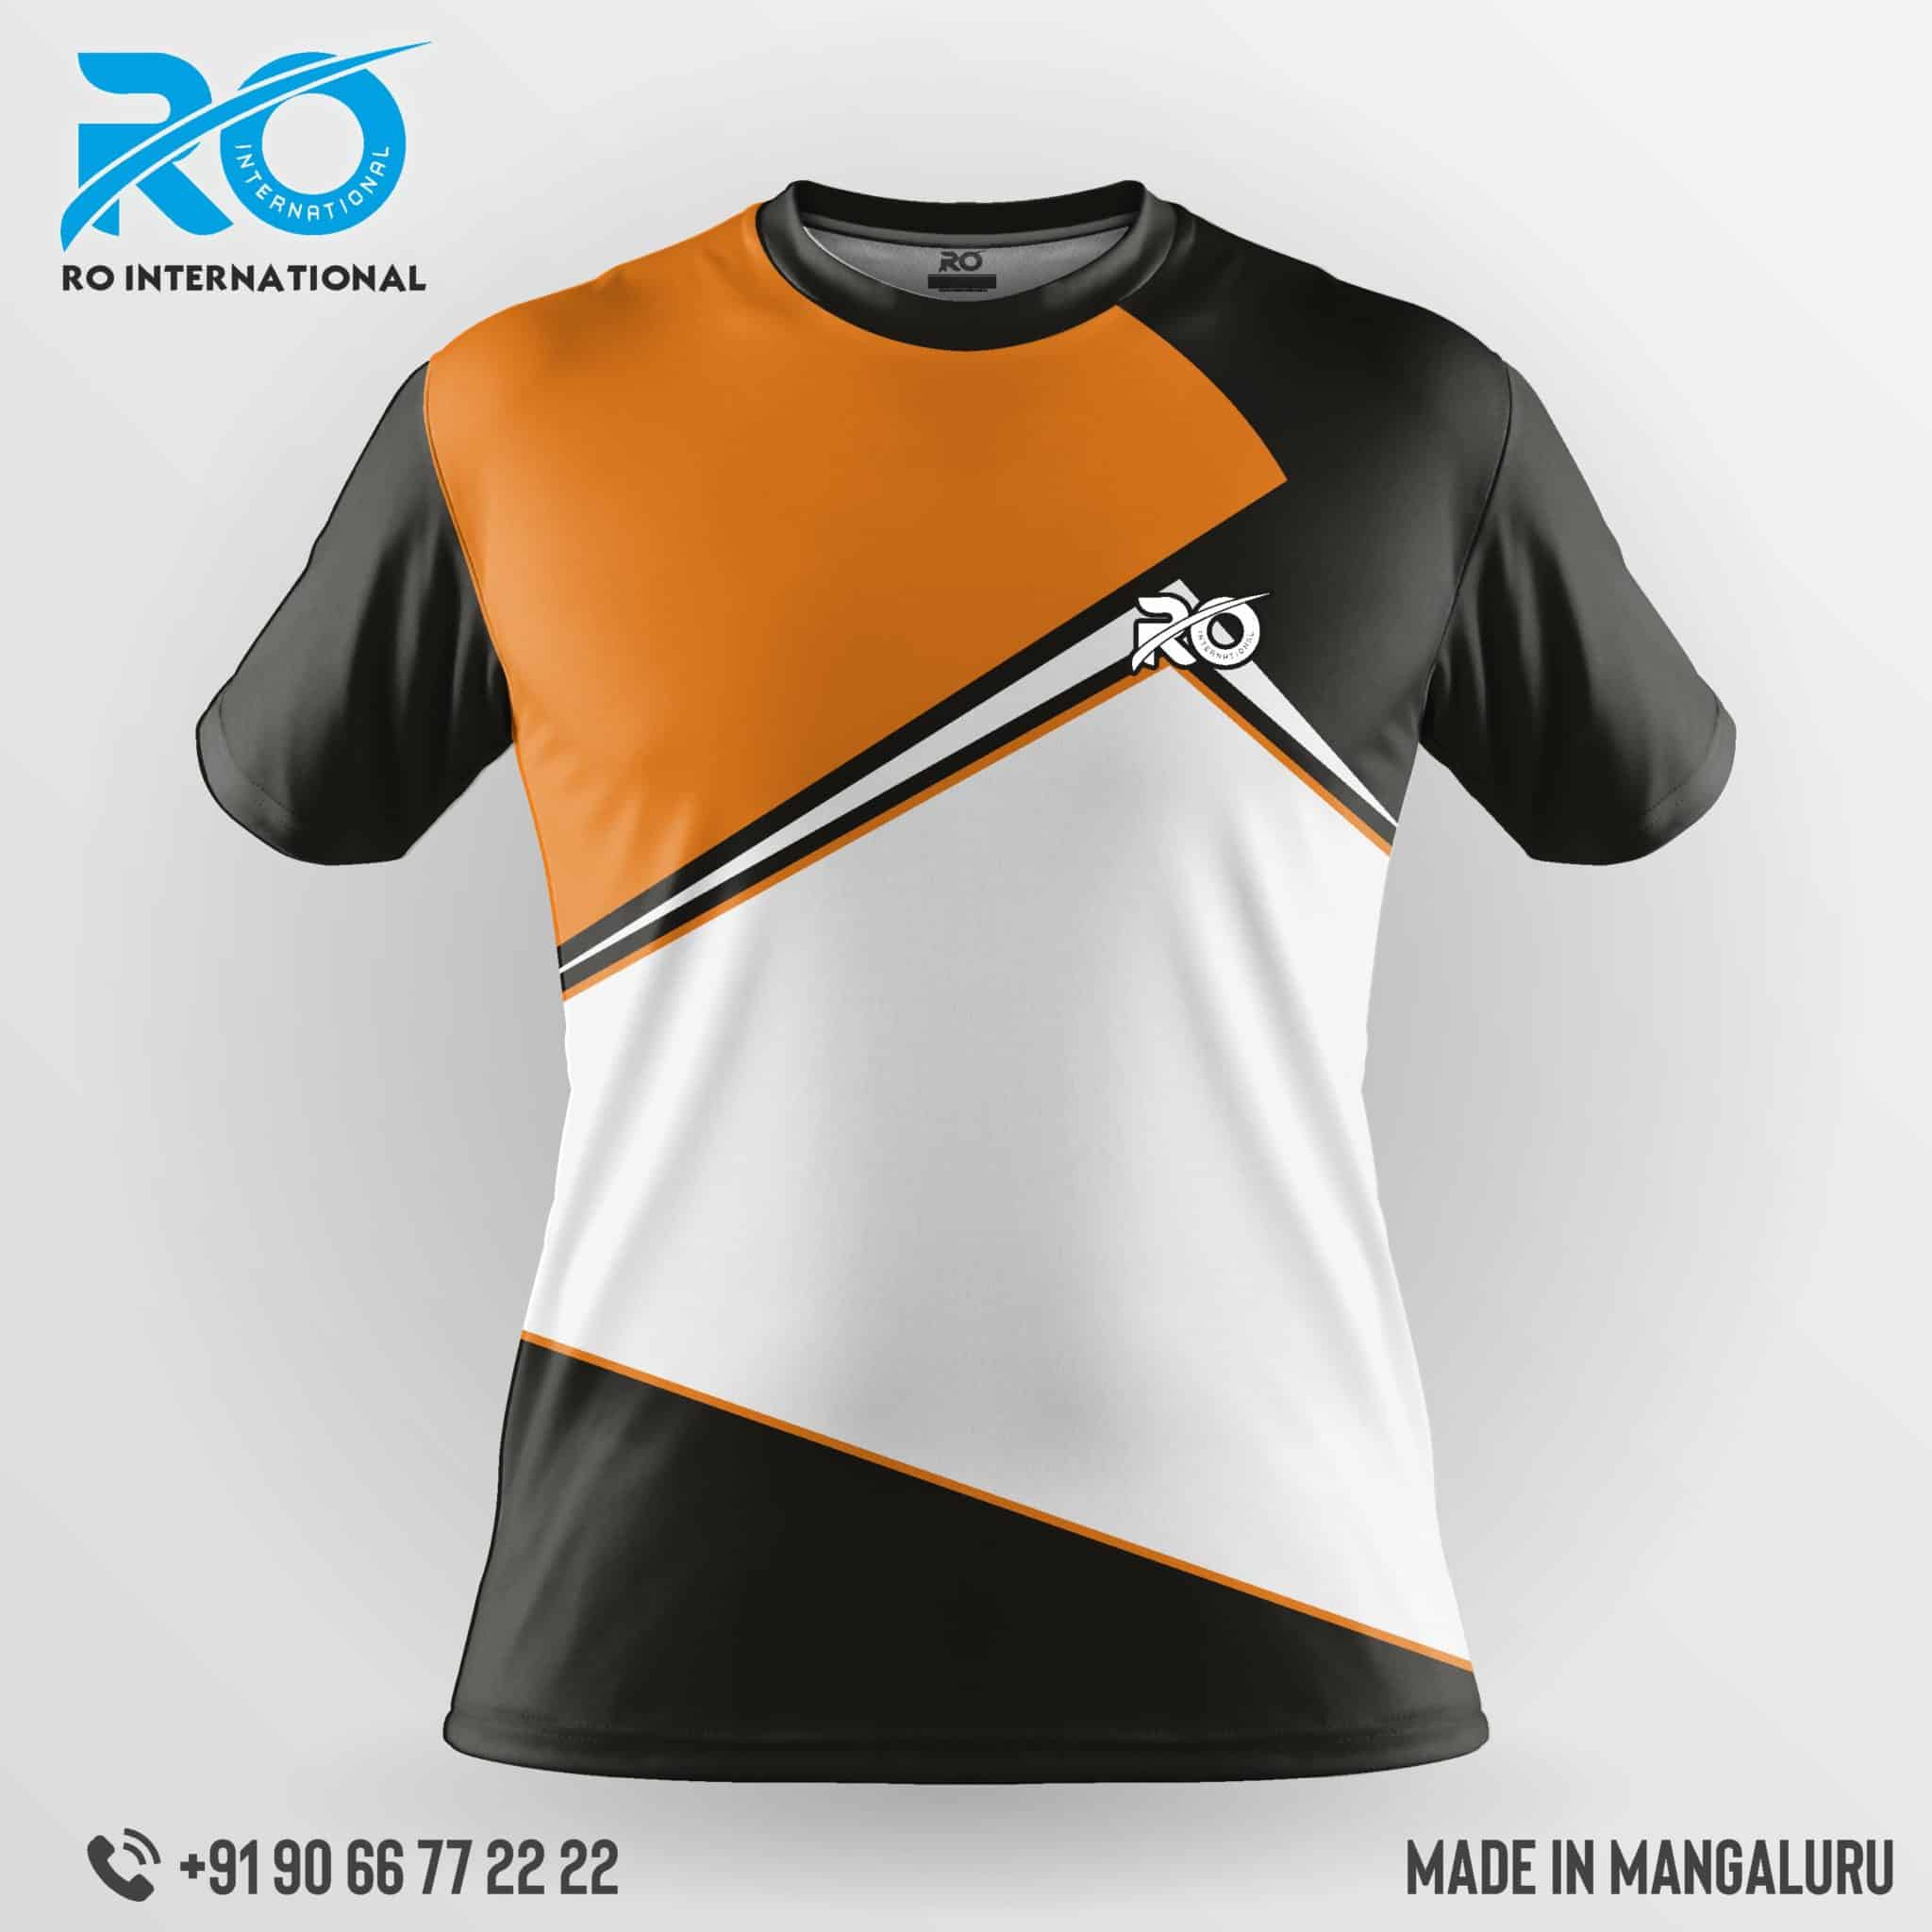 Ro FS Sublimation Jersey Orange Black White - RO International